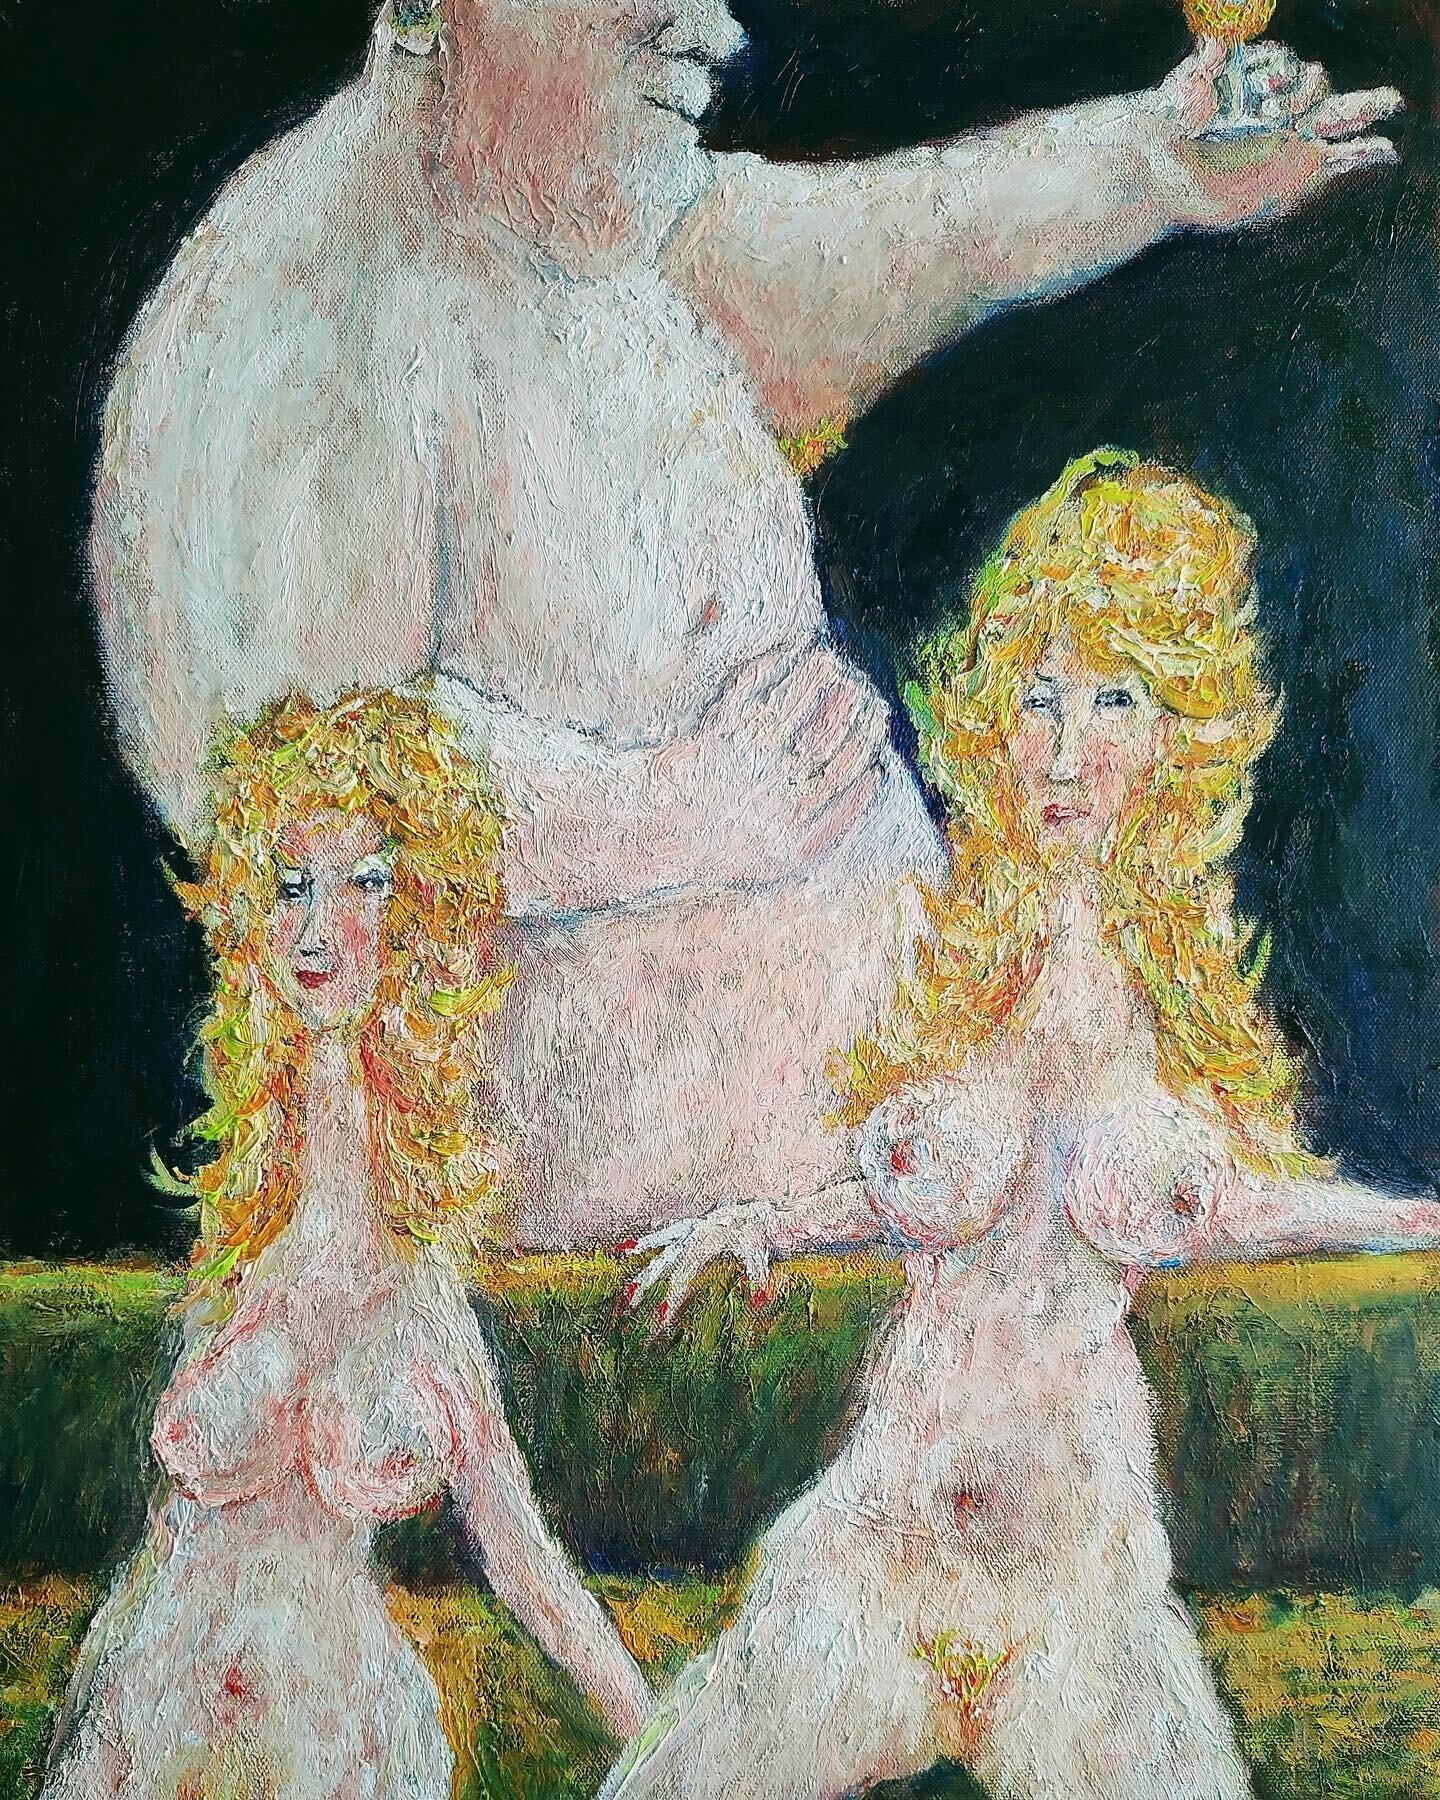 &ldquo;Homage a Vollard&rdquo; oil on canvas 24&rdquo; x 18&rdquo; #paintings #oilpainting #vollard #picasso #artist #artcollector #fantasy #dream #expressionism #nude #portrait